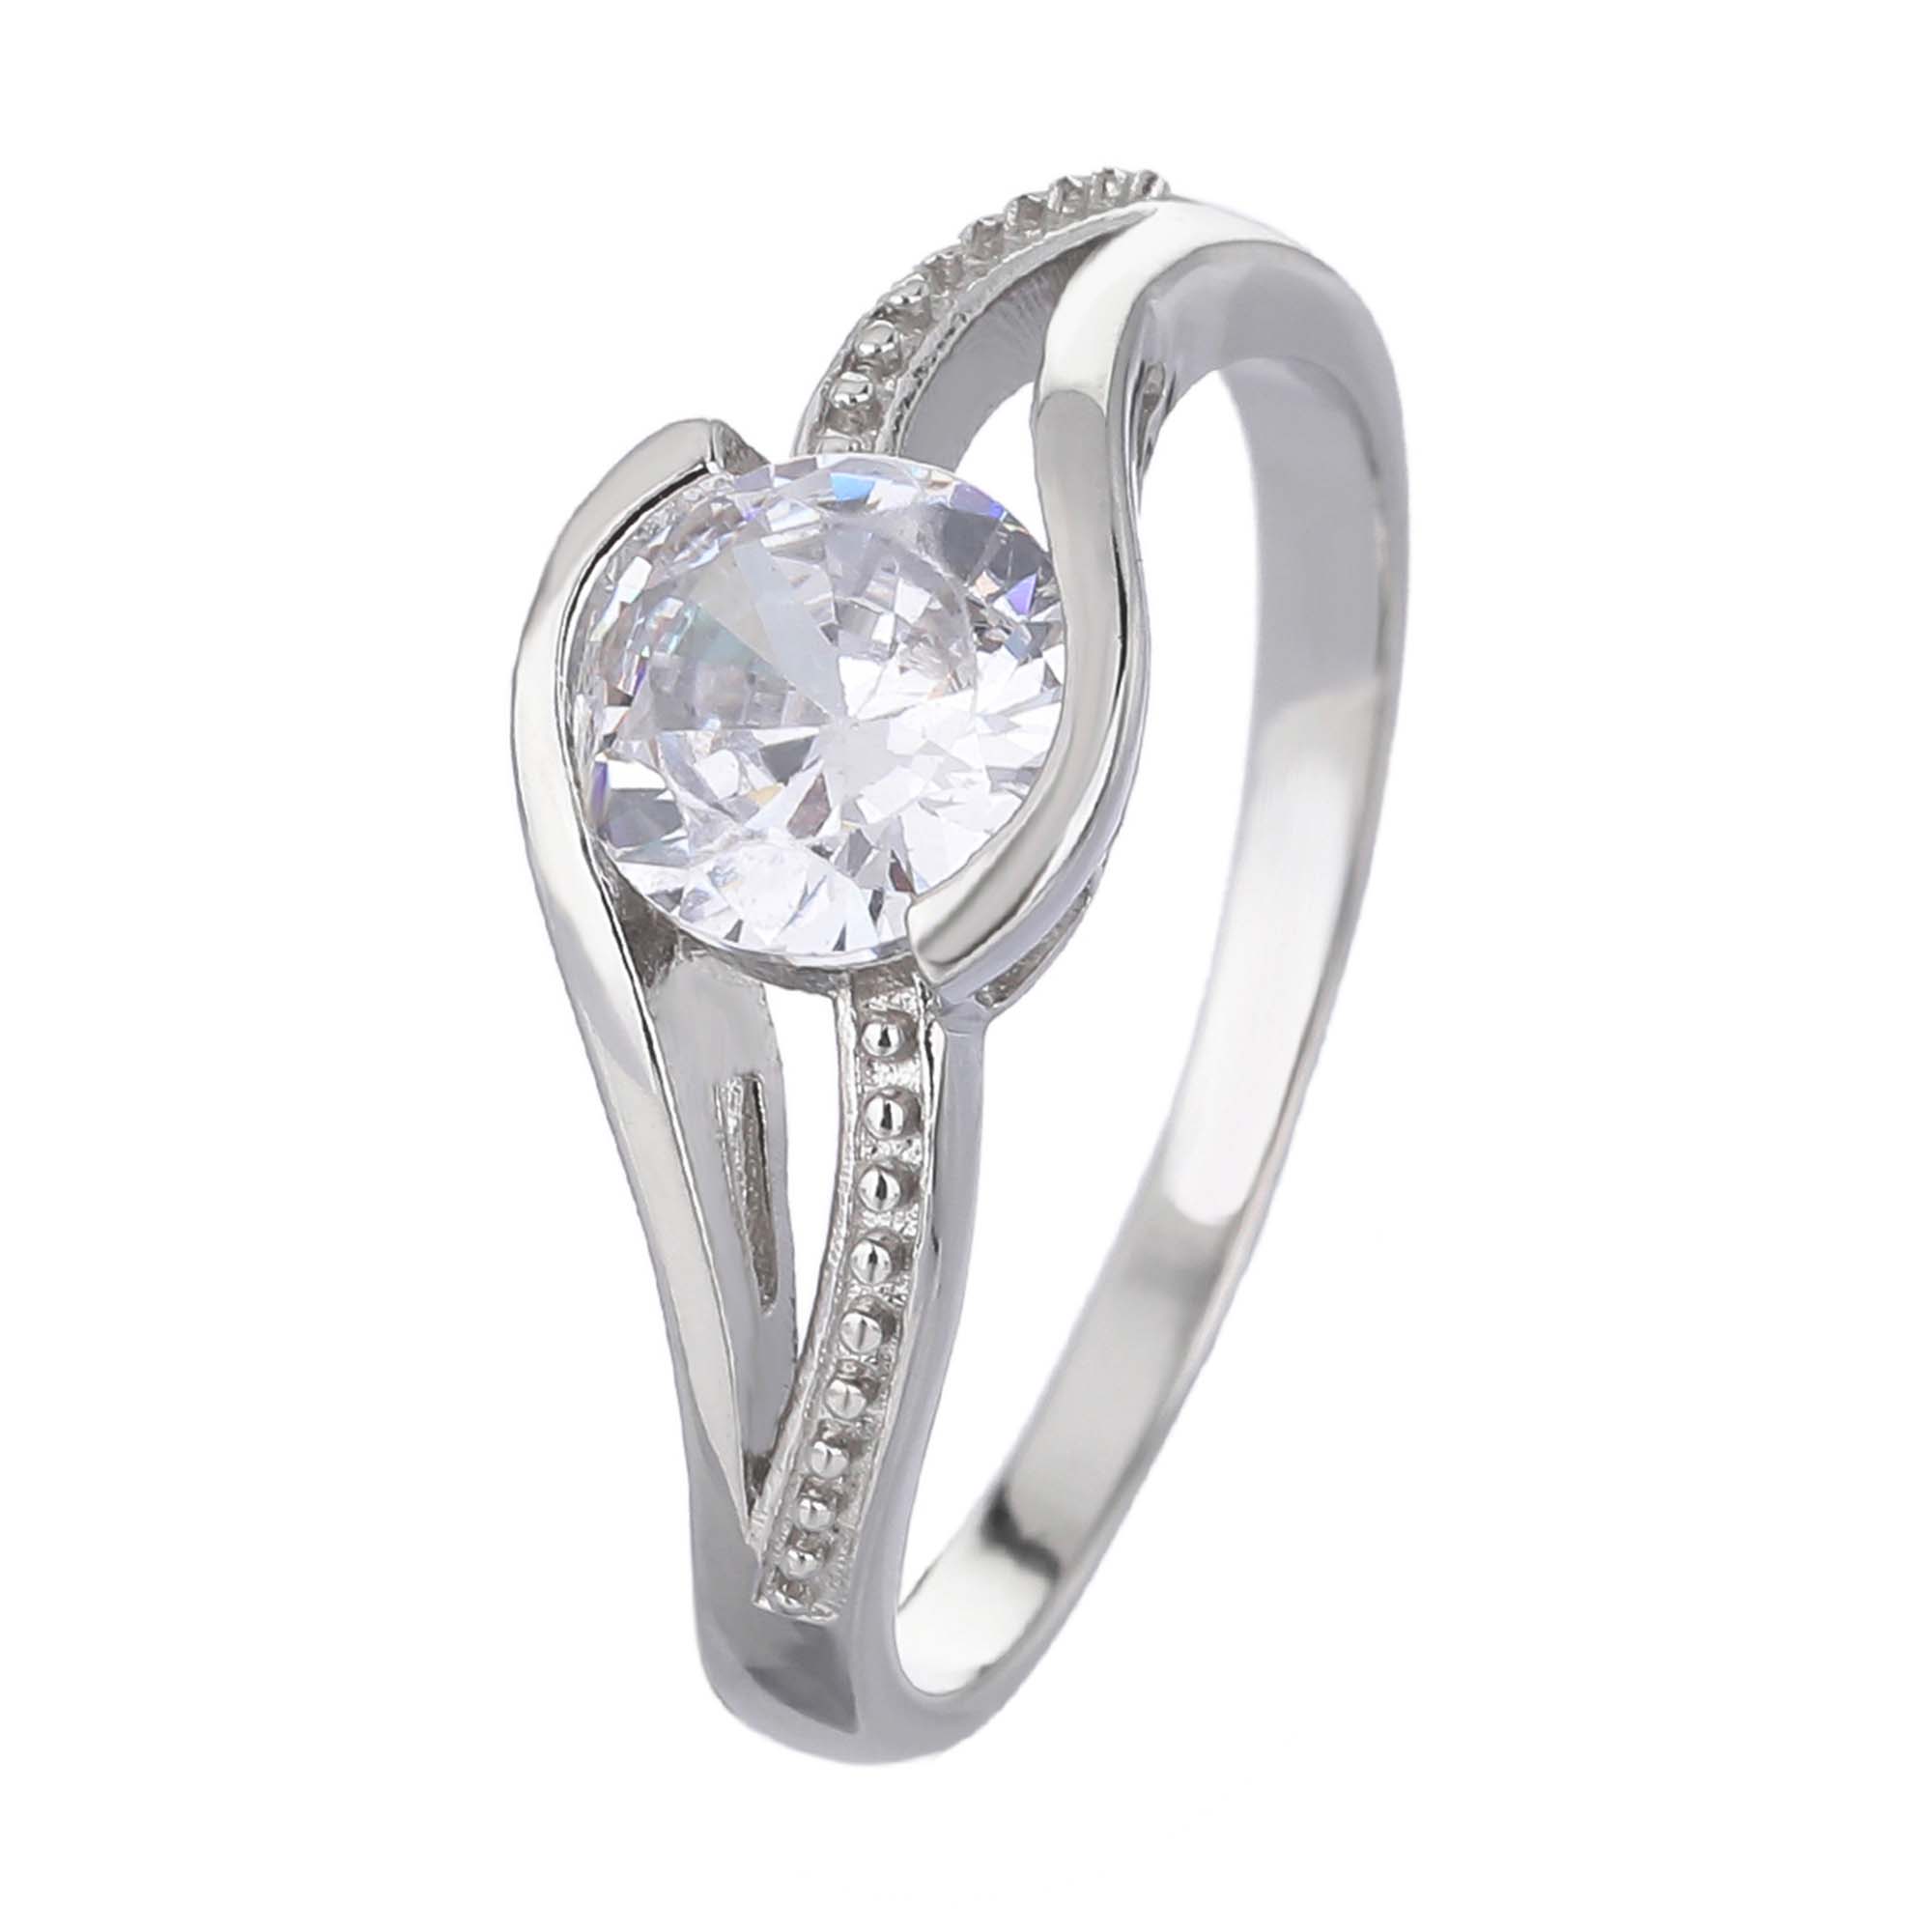 Stříbrný prsten SOLITÉR bílý VLNKY Velikost prstenu: 56 Ag 925/1000